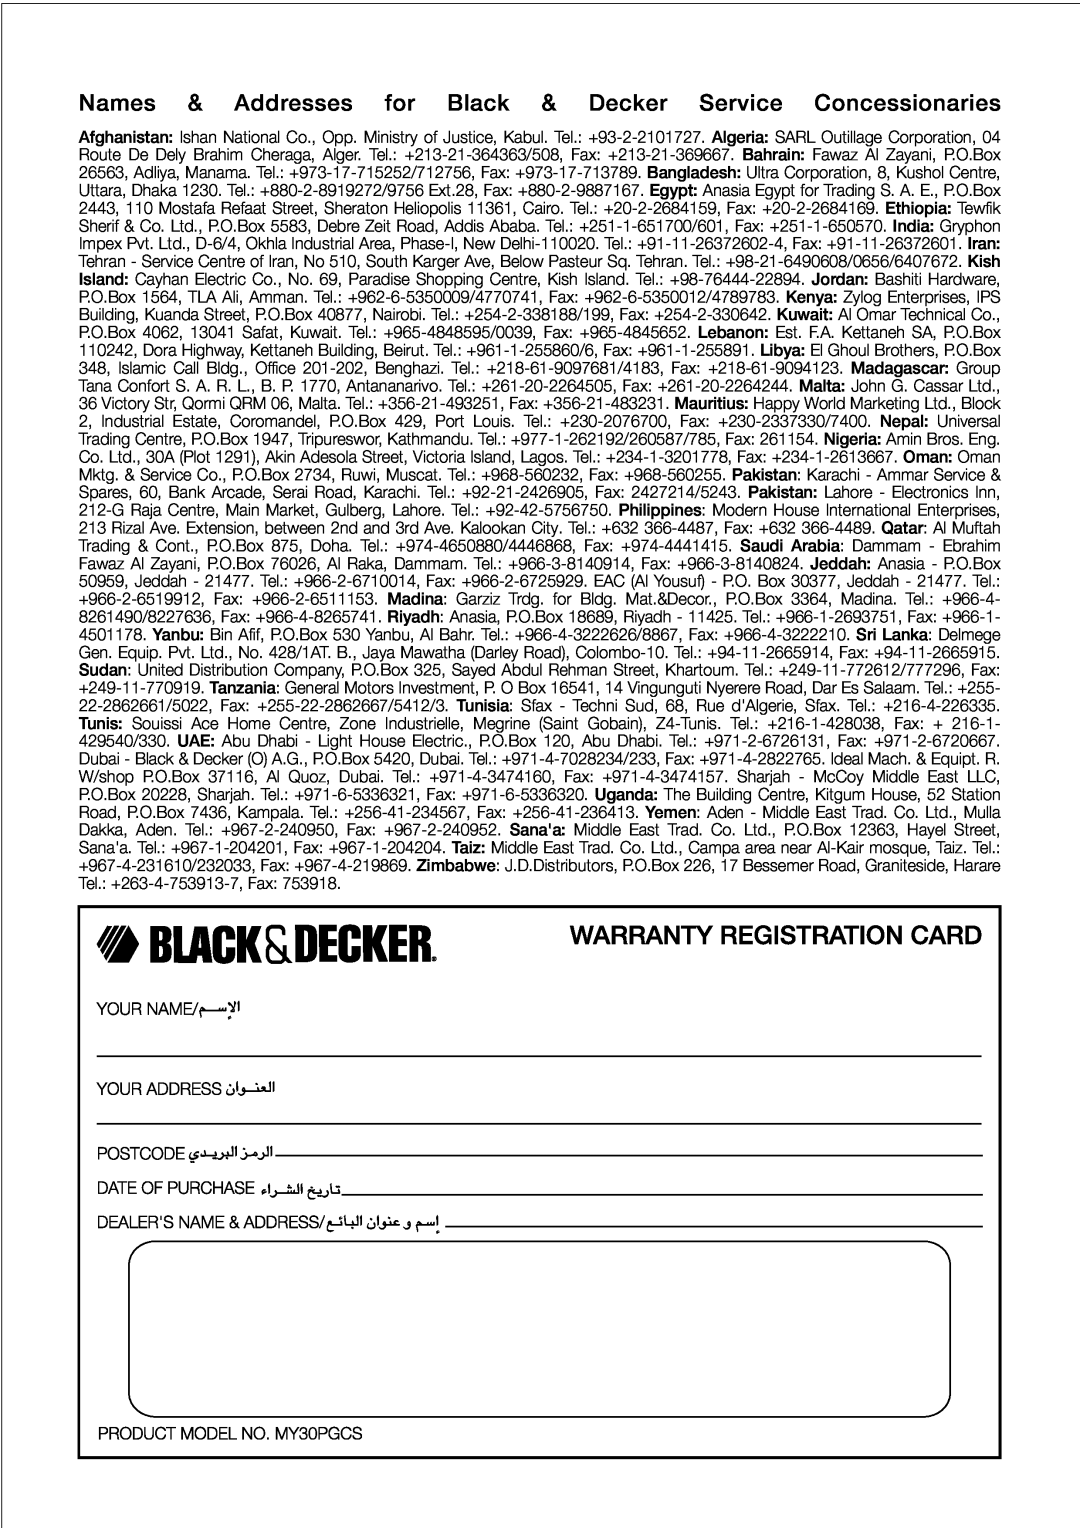 Black & Decker MY30PGCS manual Tel. +263-4-753913-7,Fax 